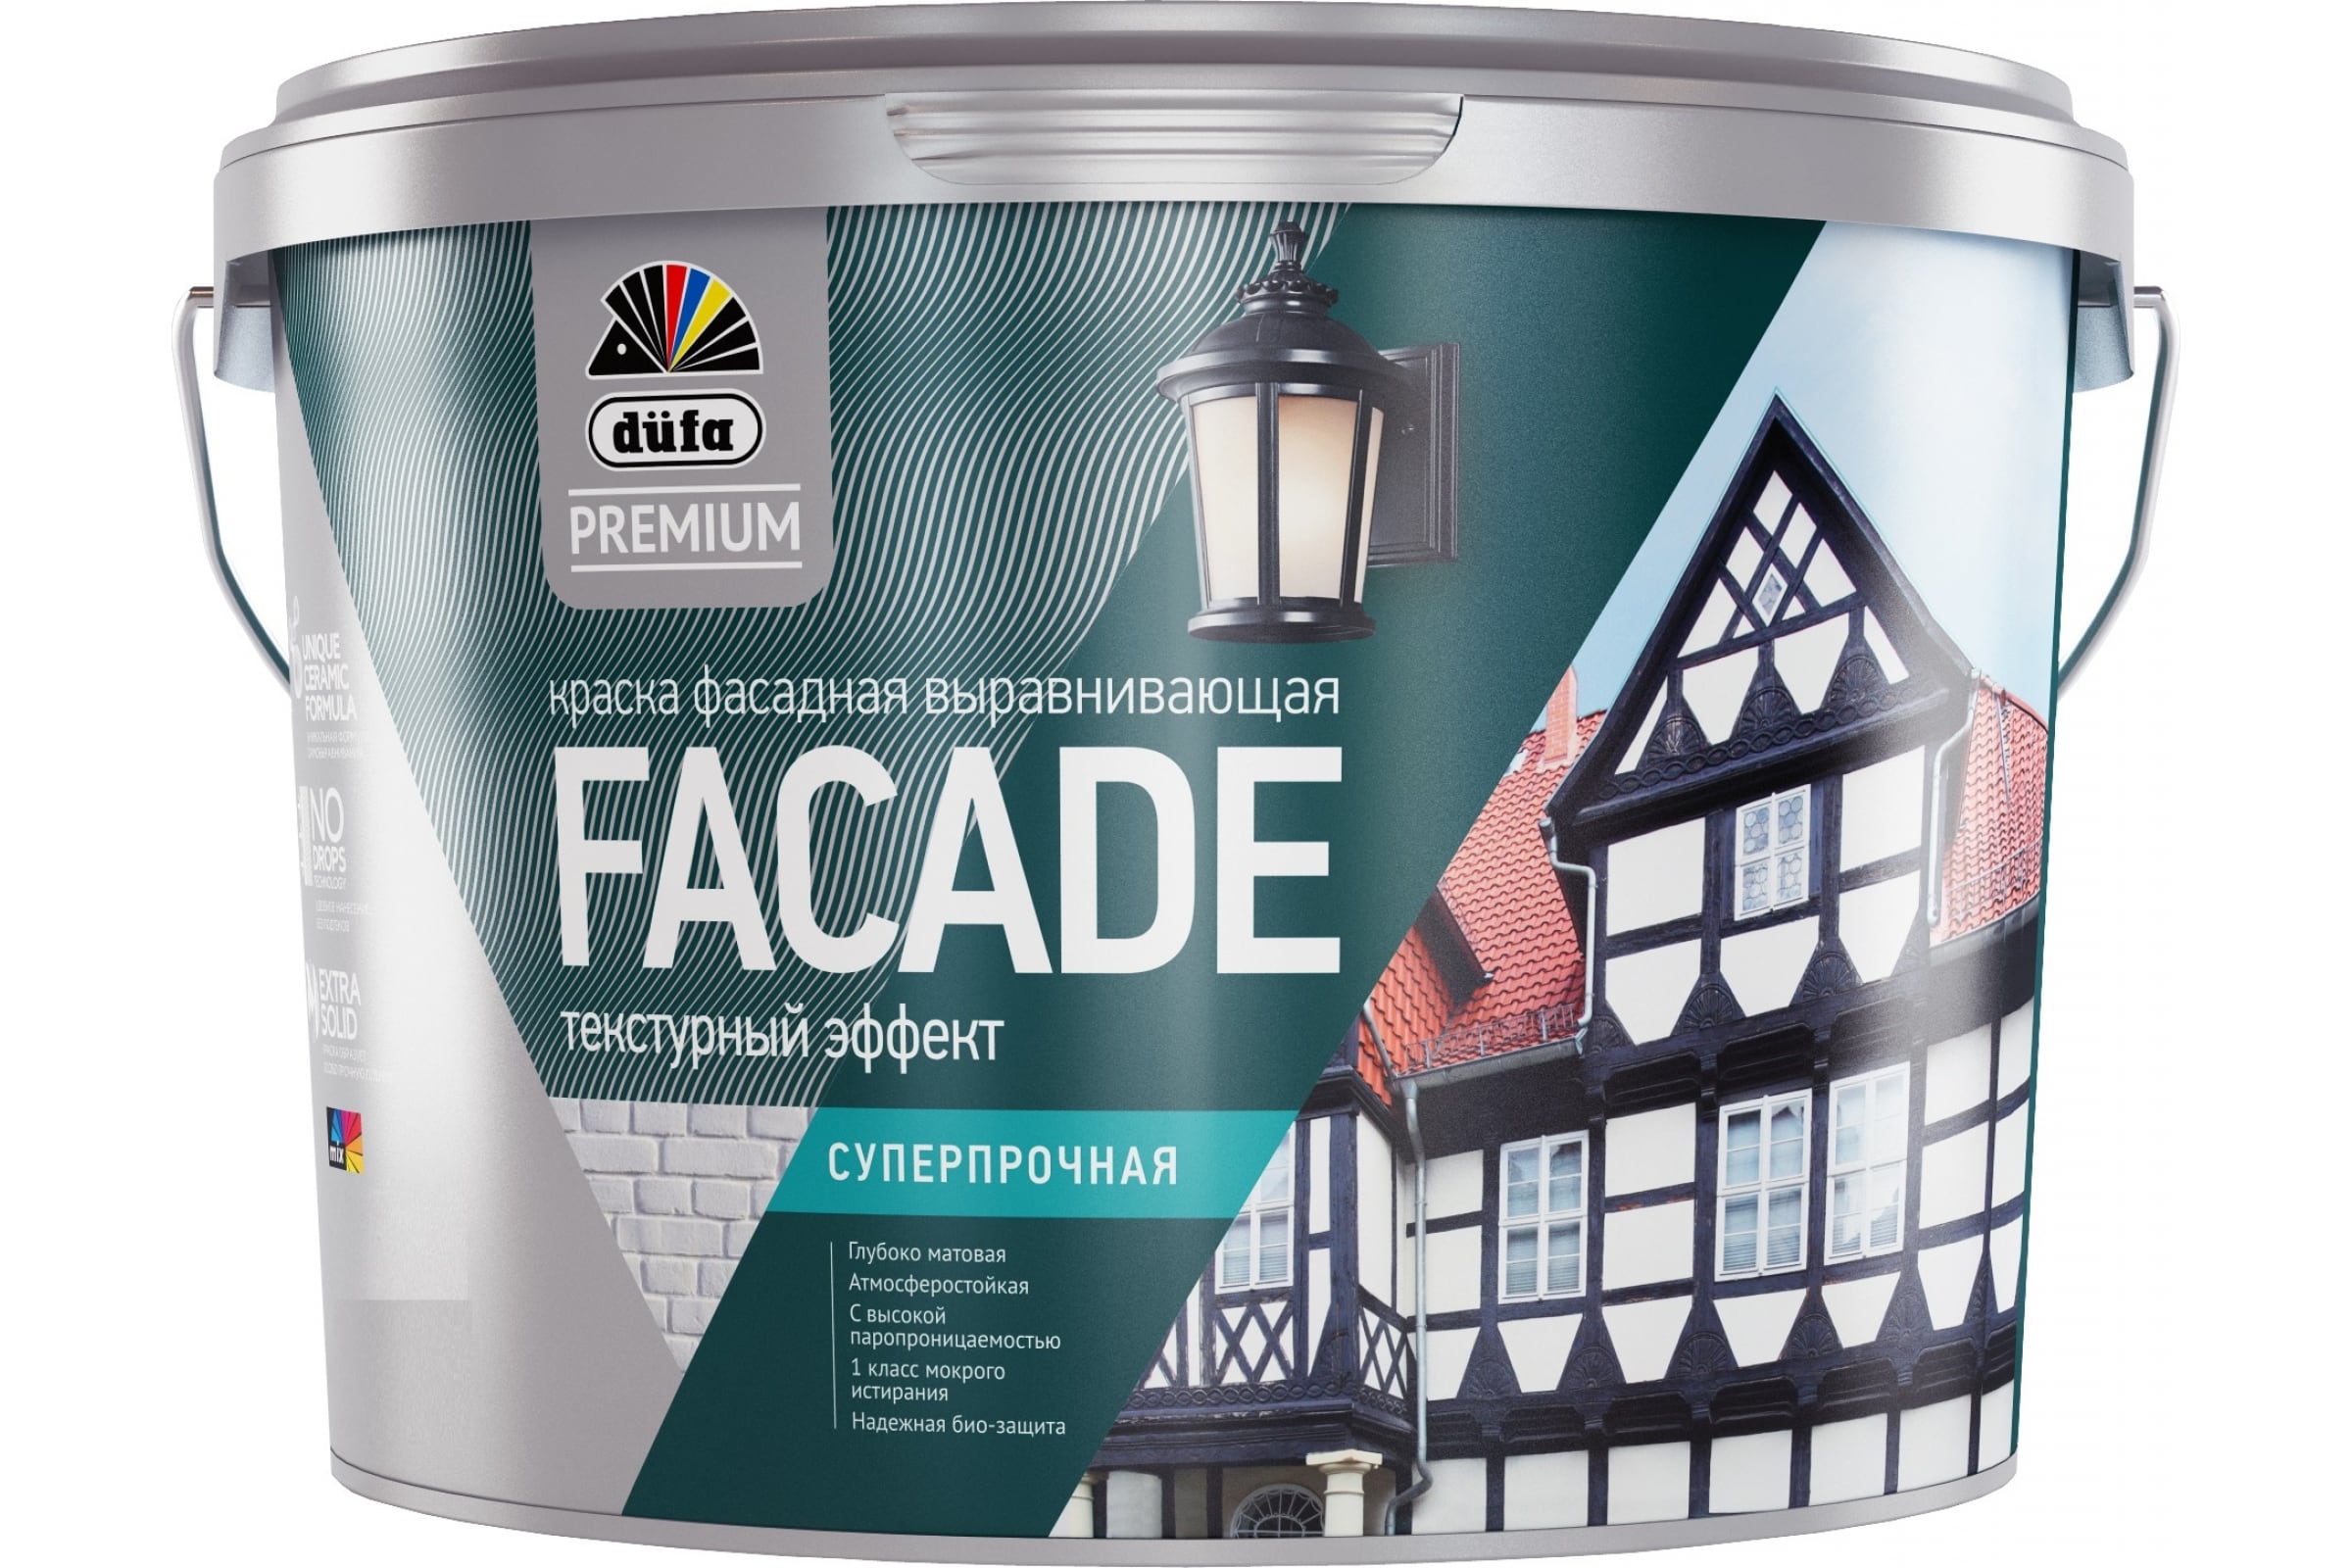 Dufa Premium FACADE краска фасадная суперпрочная, base 1, 2,5 л Н0000004344